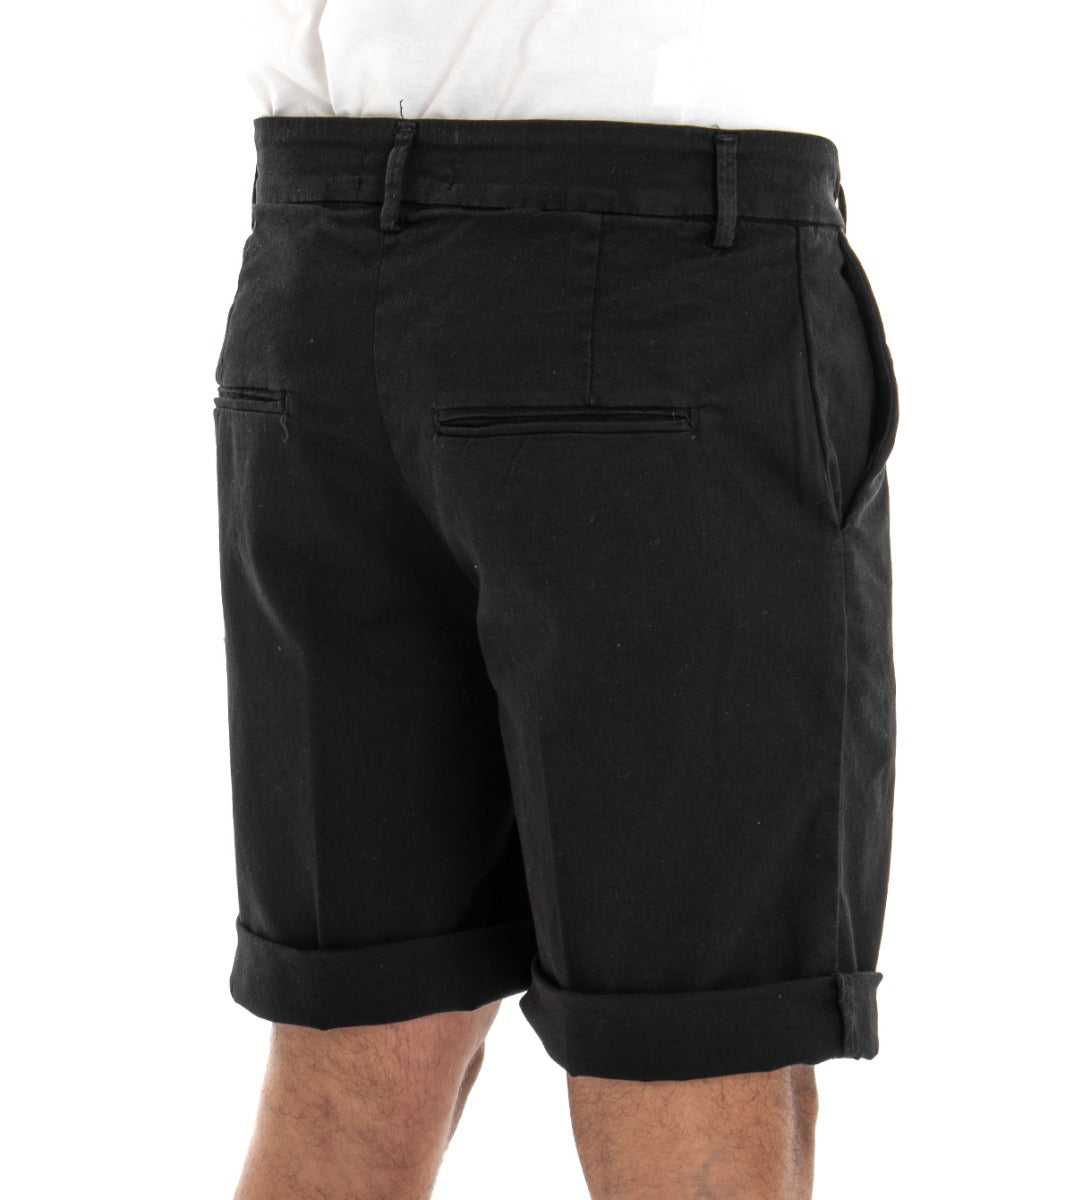 Bermuda Short Men's Cotton America Pocket Shorts Black GIOSAL-PC1378A